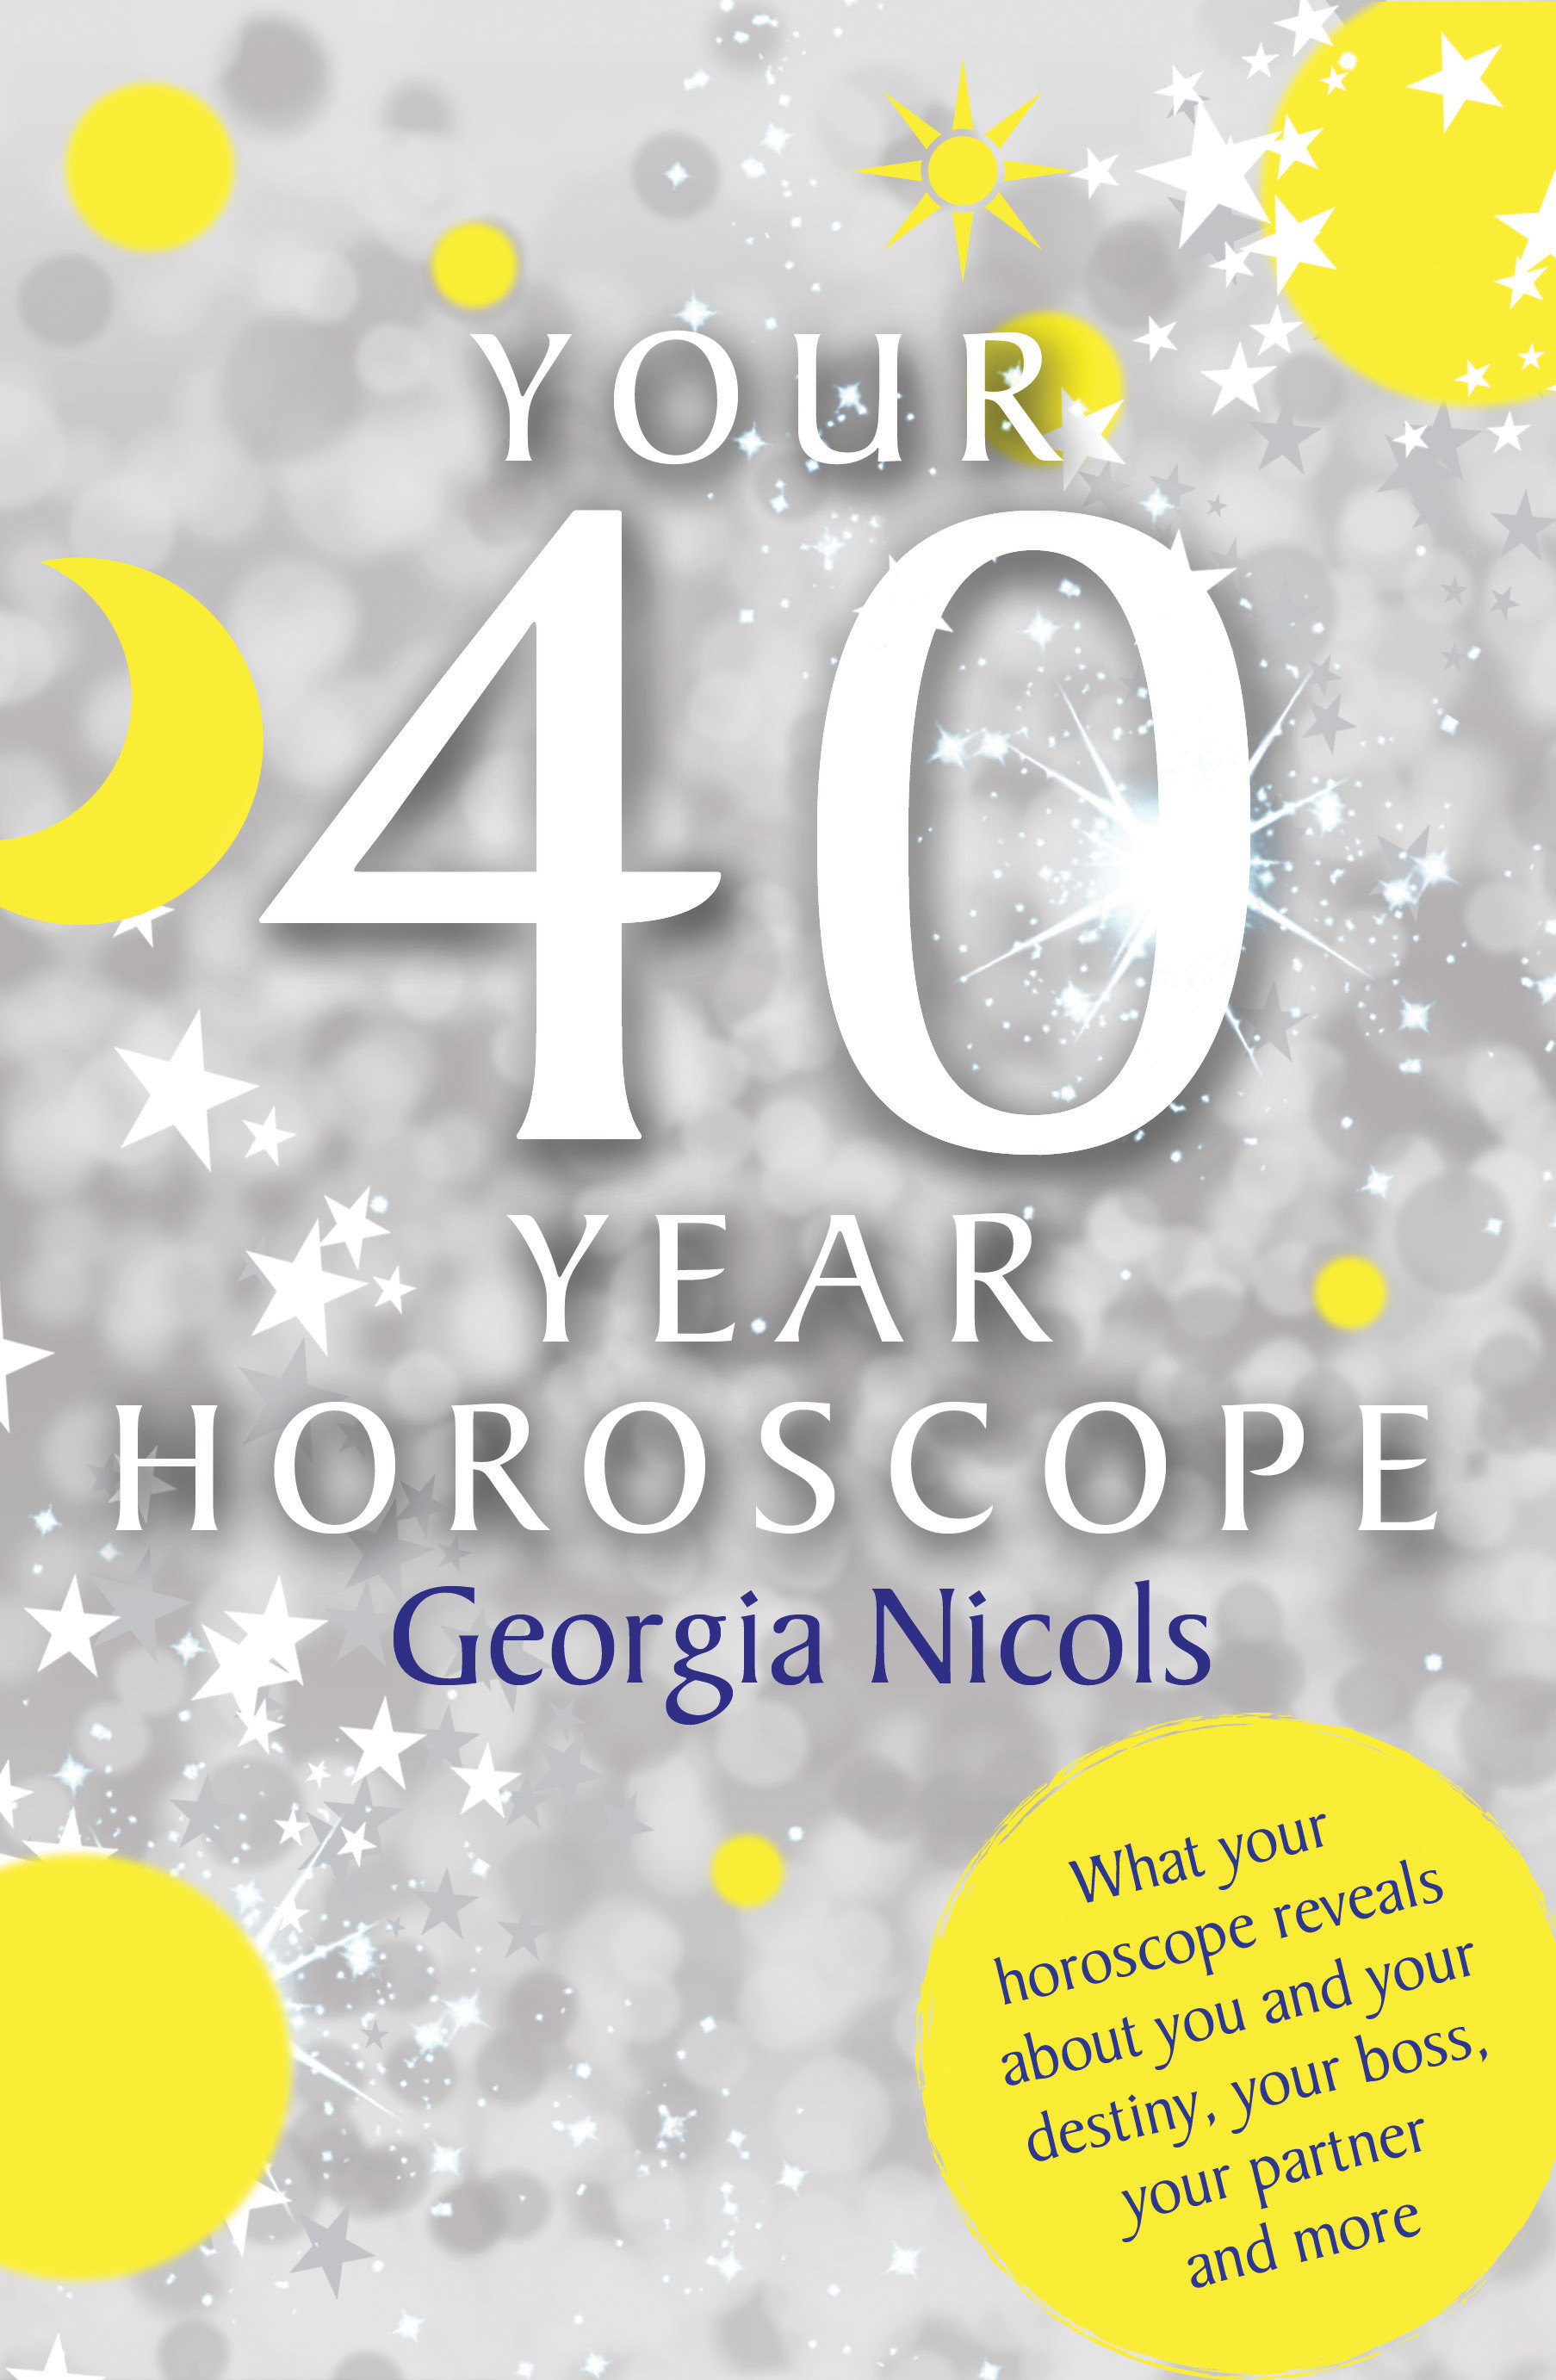 georgia nicols horoscope